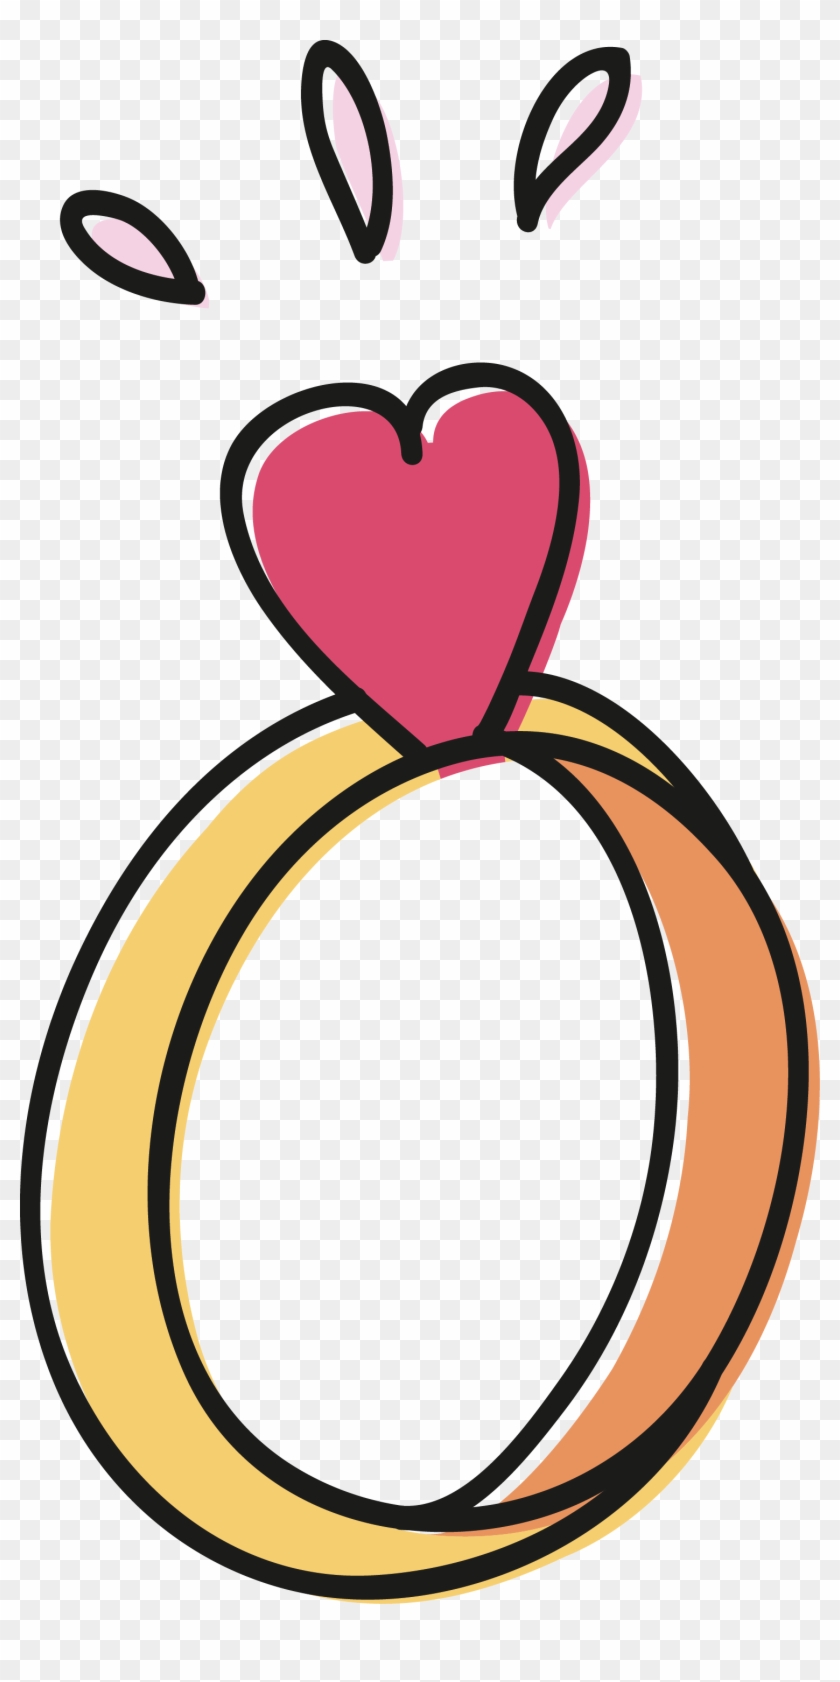 Heart Ring Diamond Clip Art - Heart Ring Diamond Clip Art #532392